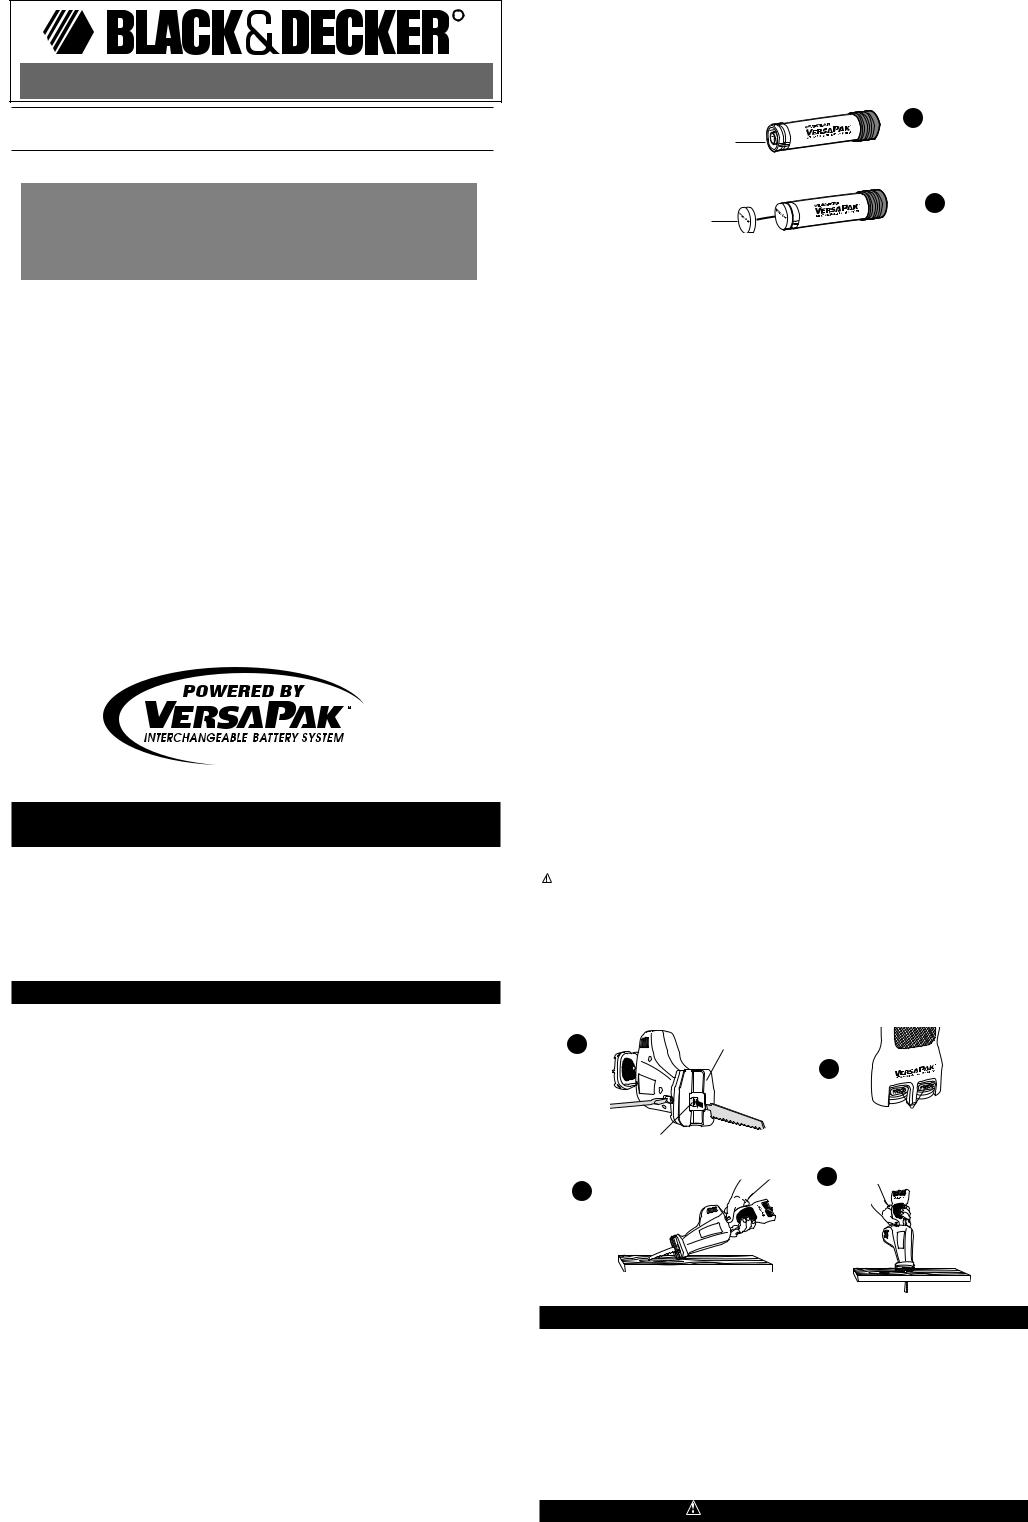 Black & Decker VP850, VP650 User Manual